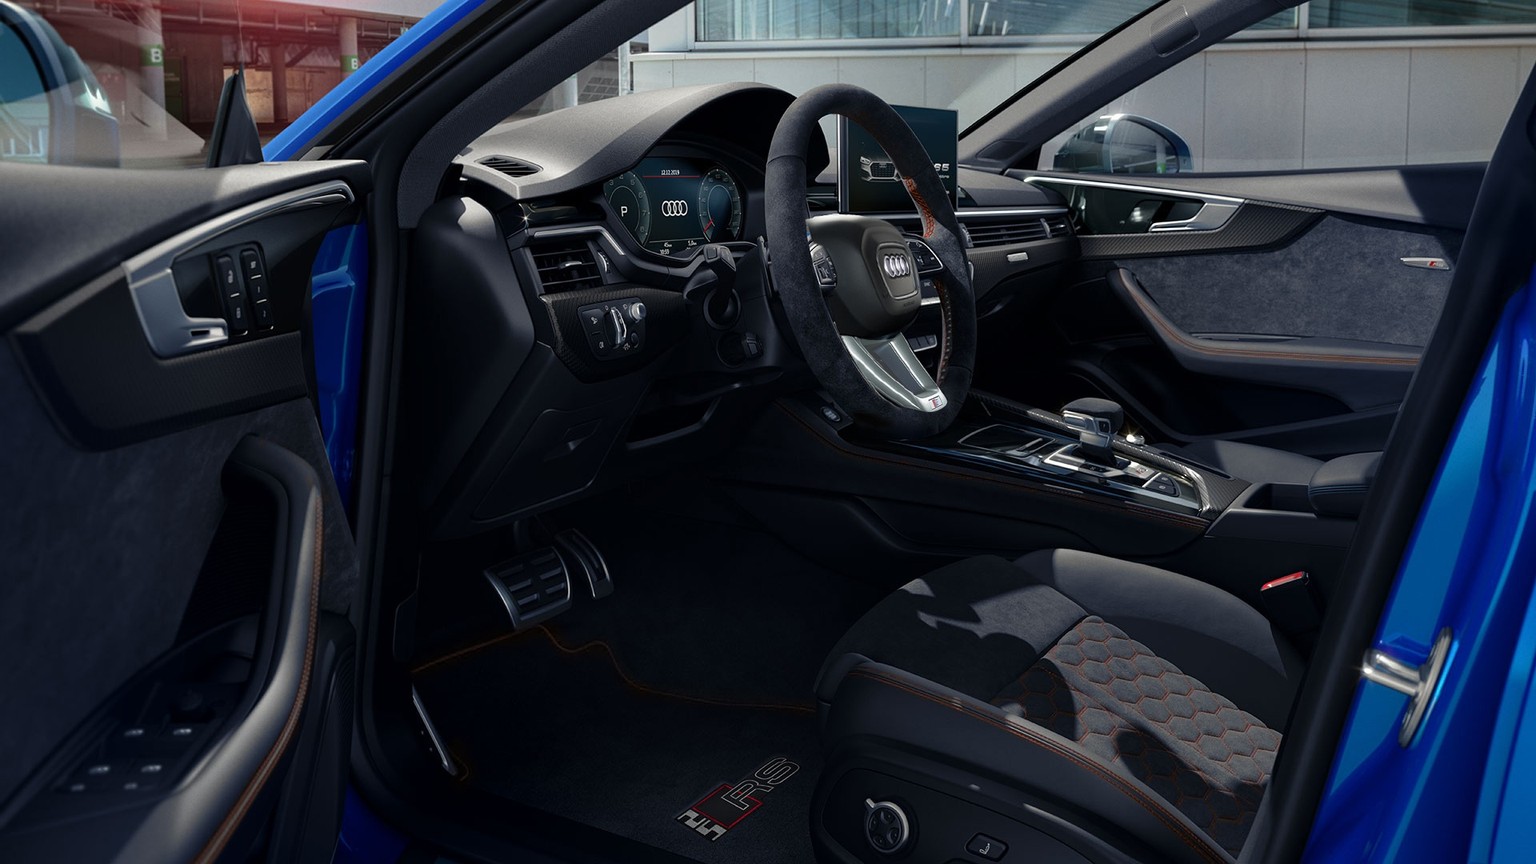 Audi RS 5 Coupé interior - Audi Australia